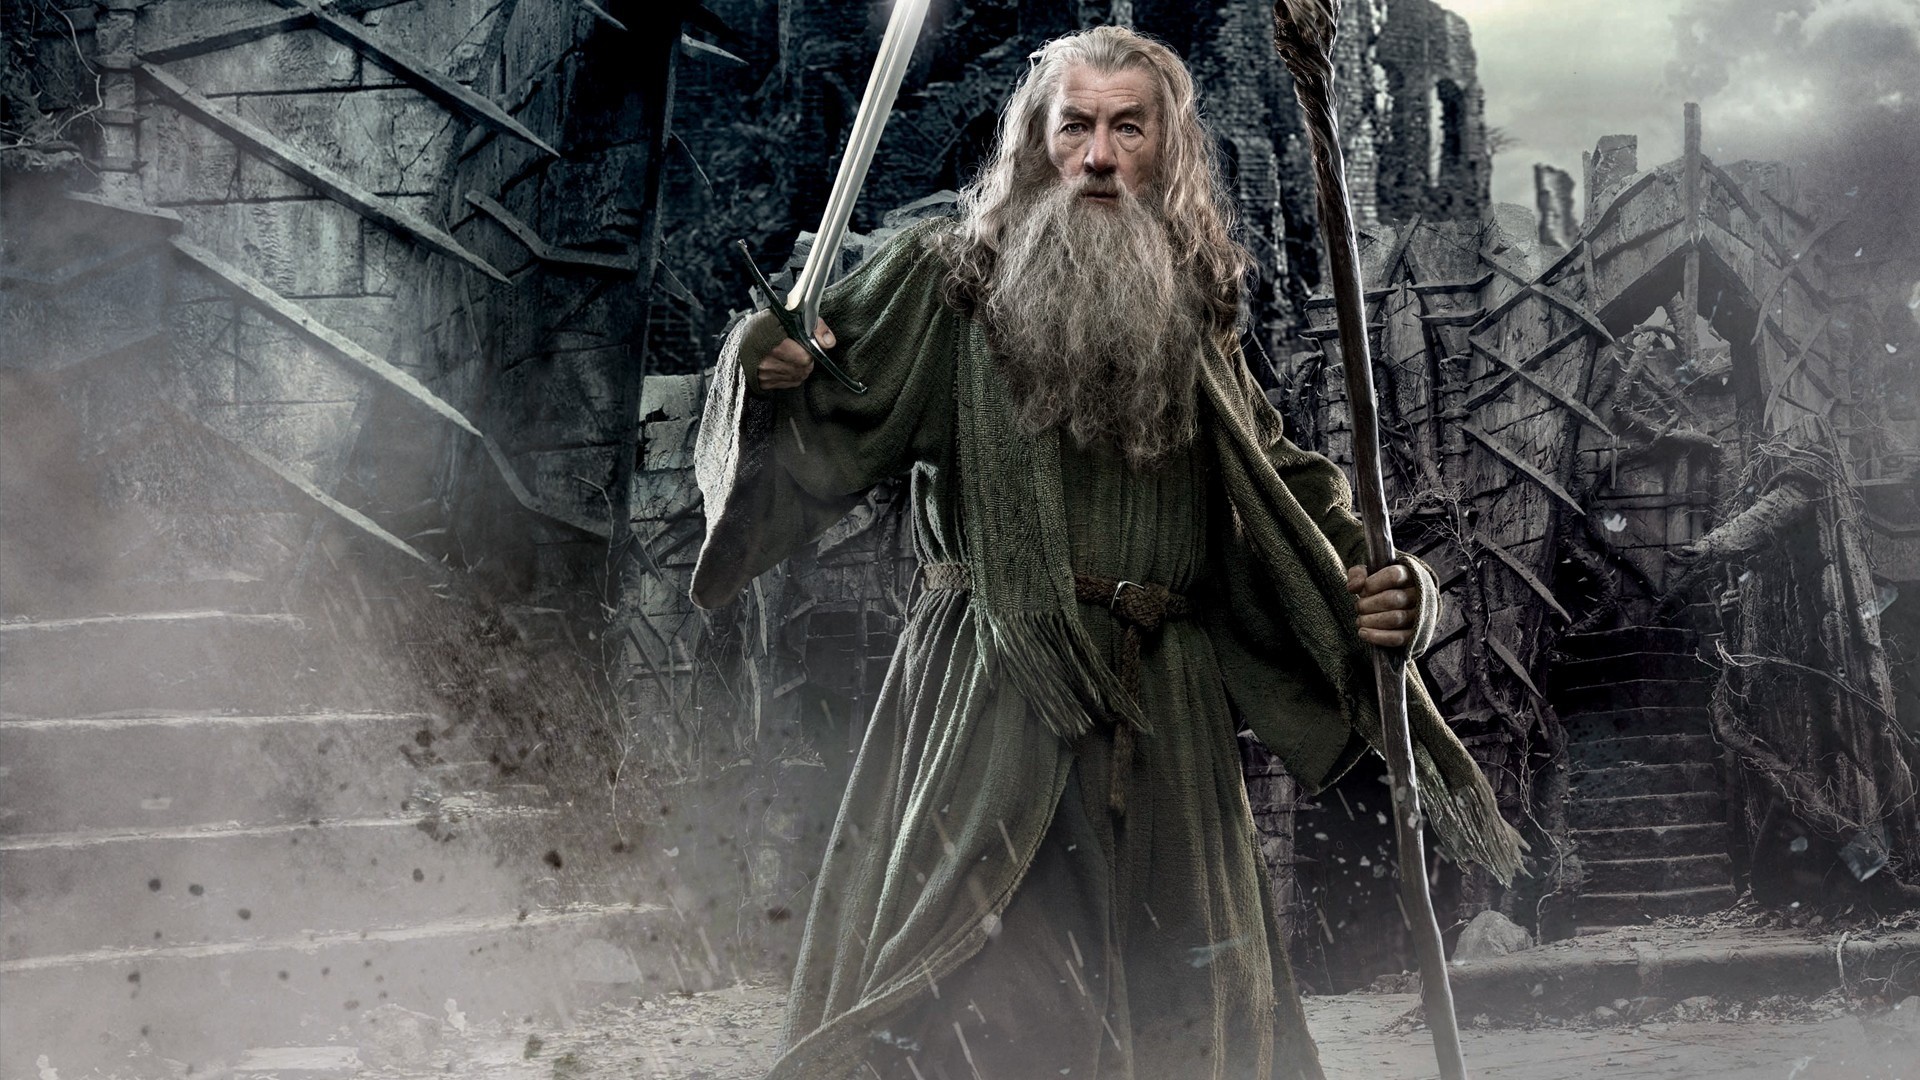 General 1920x1080 Ian McKellen movies The Lord of the Rings Gandalf wizard sword staff fantasy men